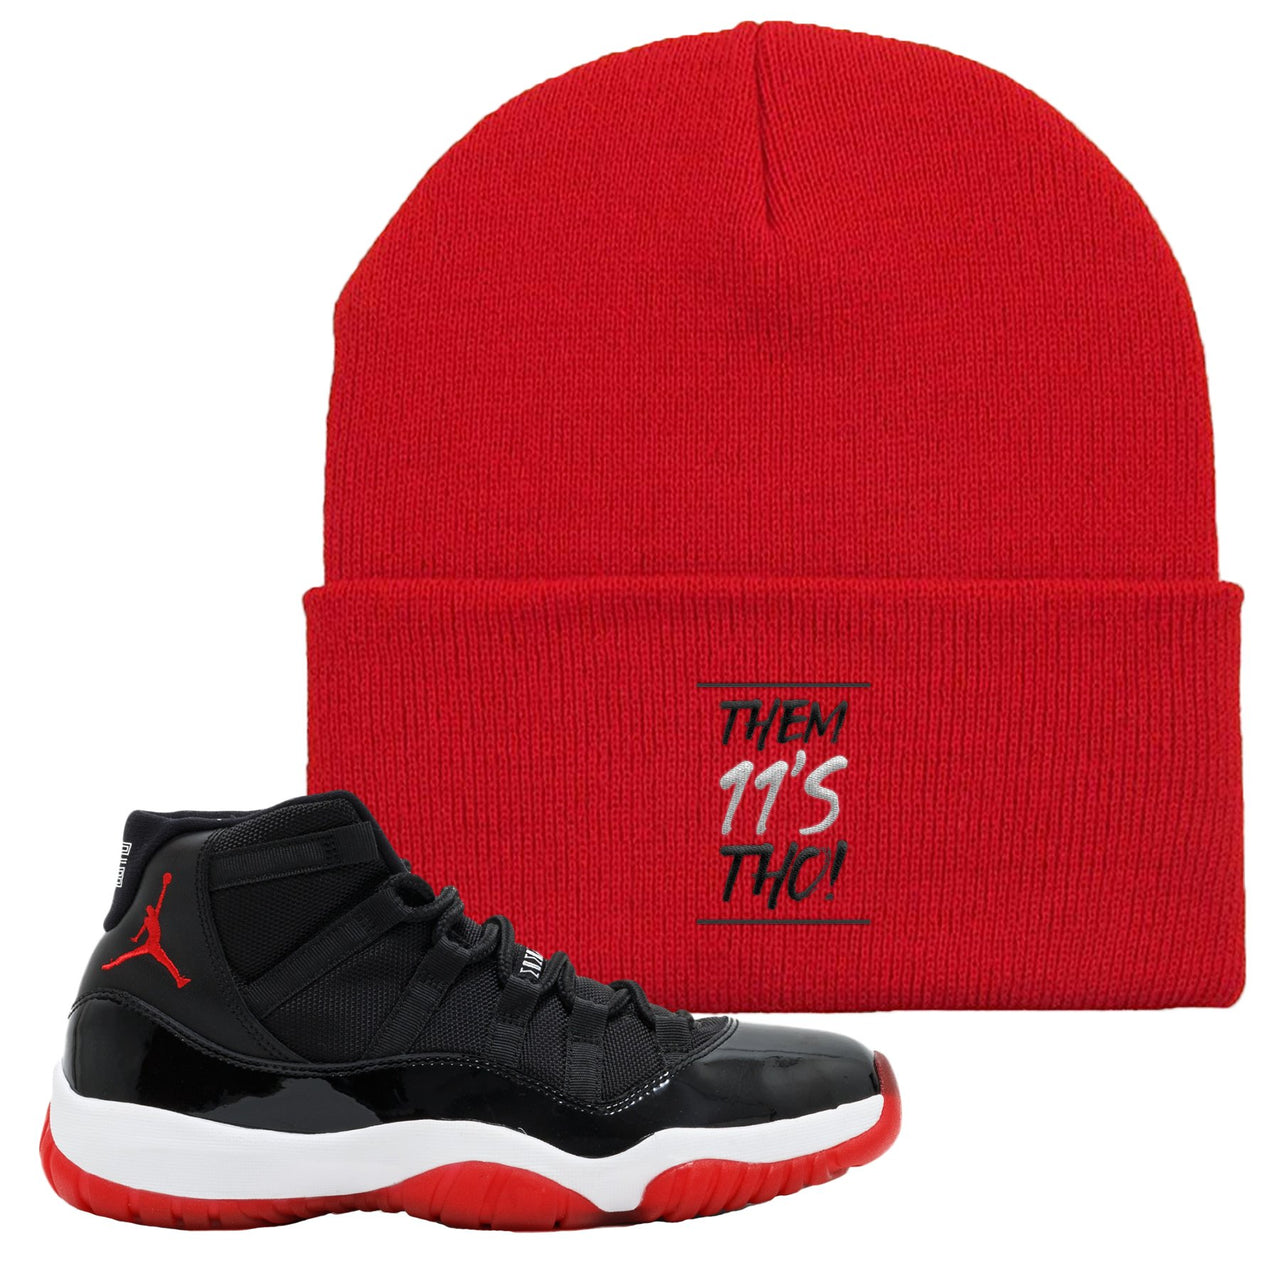 Jordan 11 Bred Them 11s Tho! Red Sneaker Hook Up Beanie